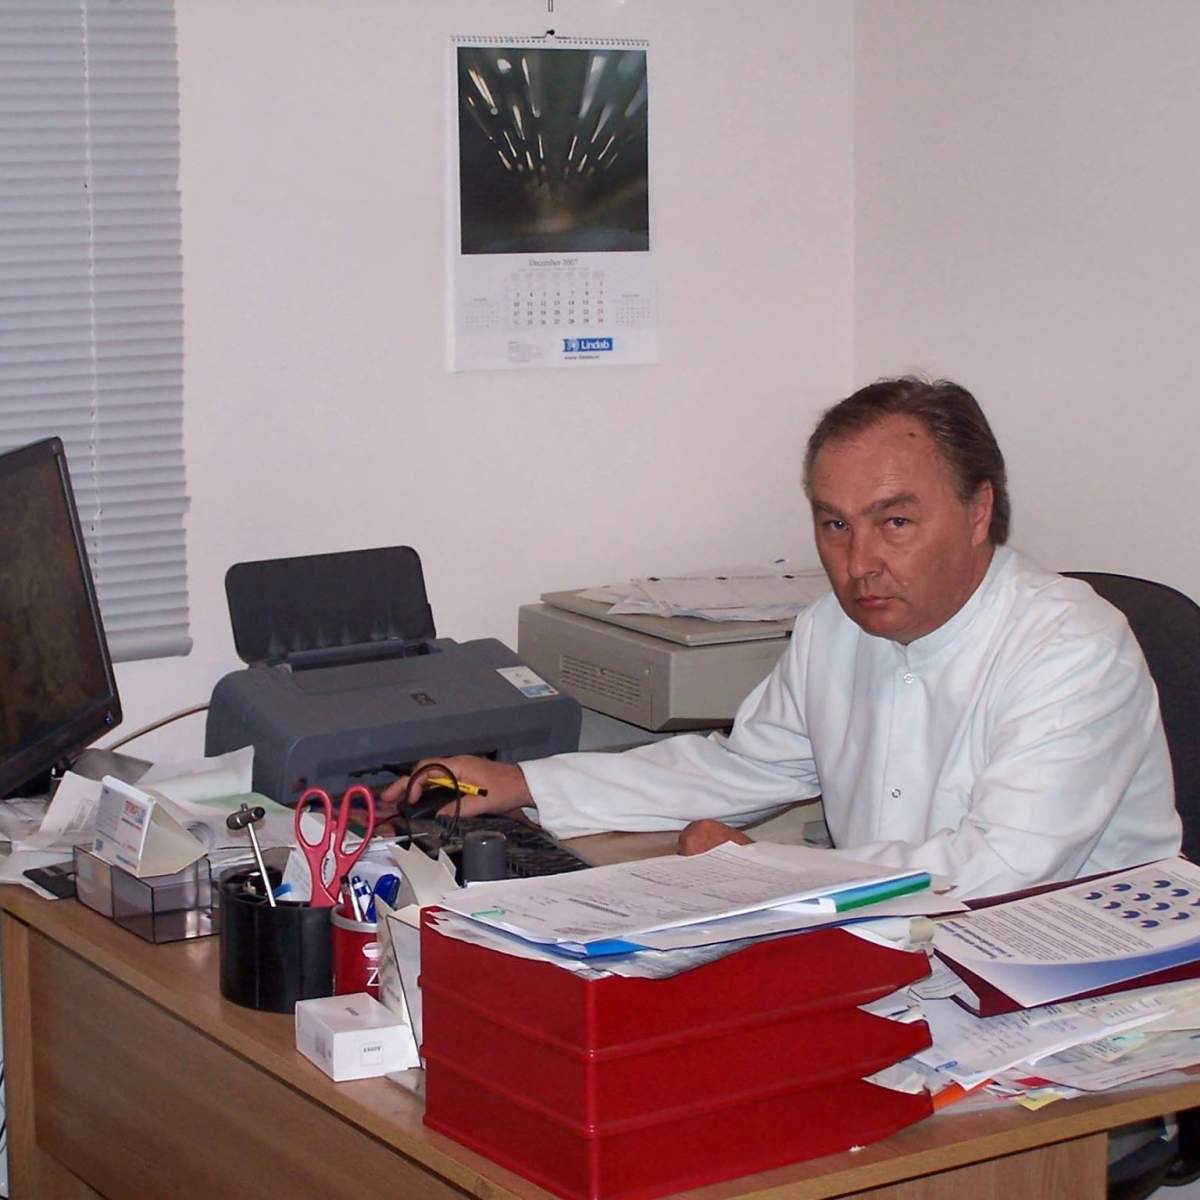 Medicul Catalin Petrencic sta la birou, poarta un halat alb